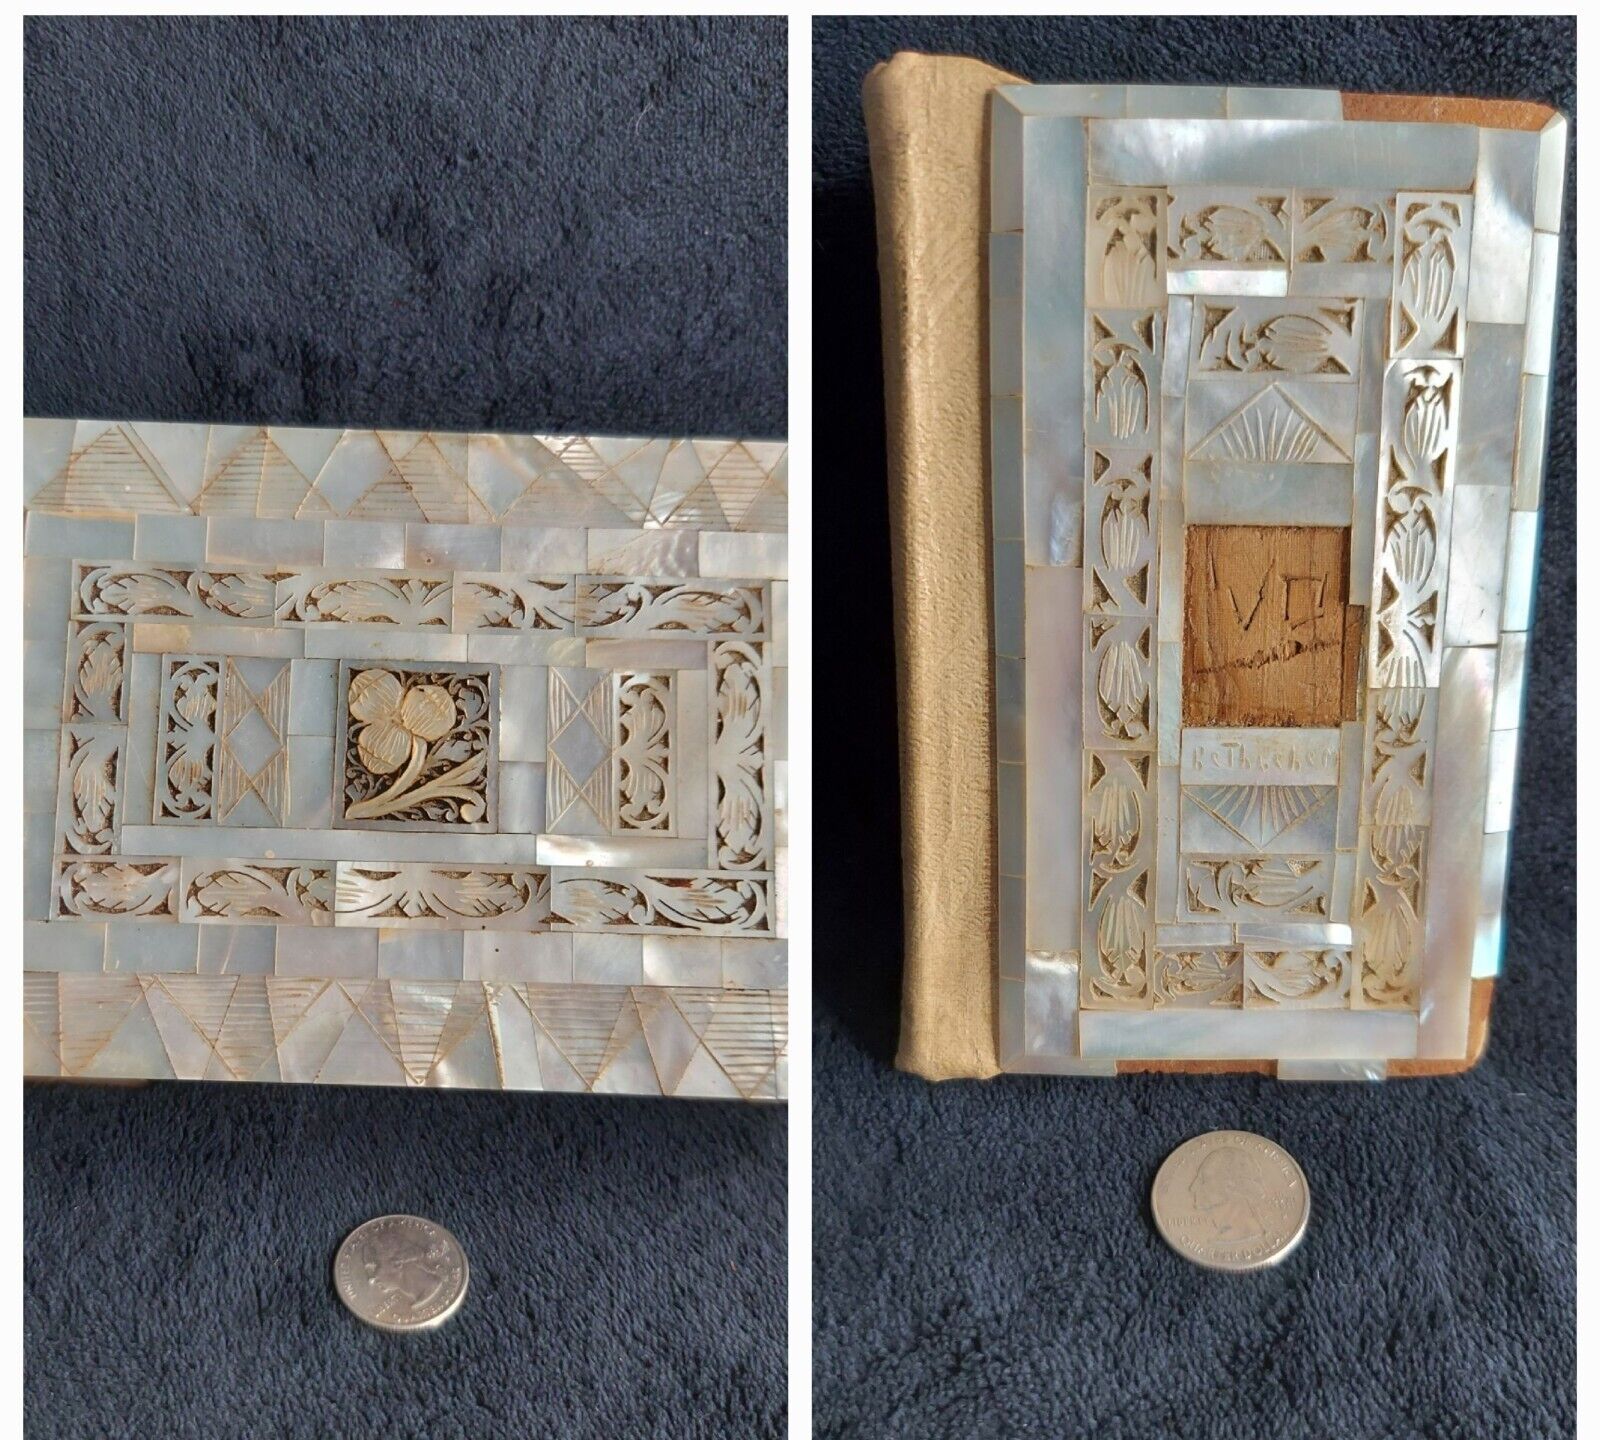 Vtg 1958 King James Bible & Box w Mother Of Pearl Mosaic Tiles for Repurposing